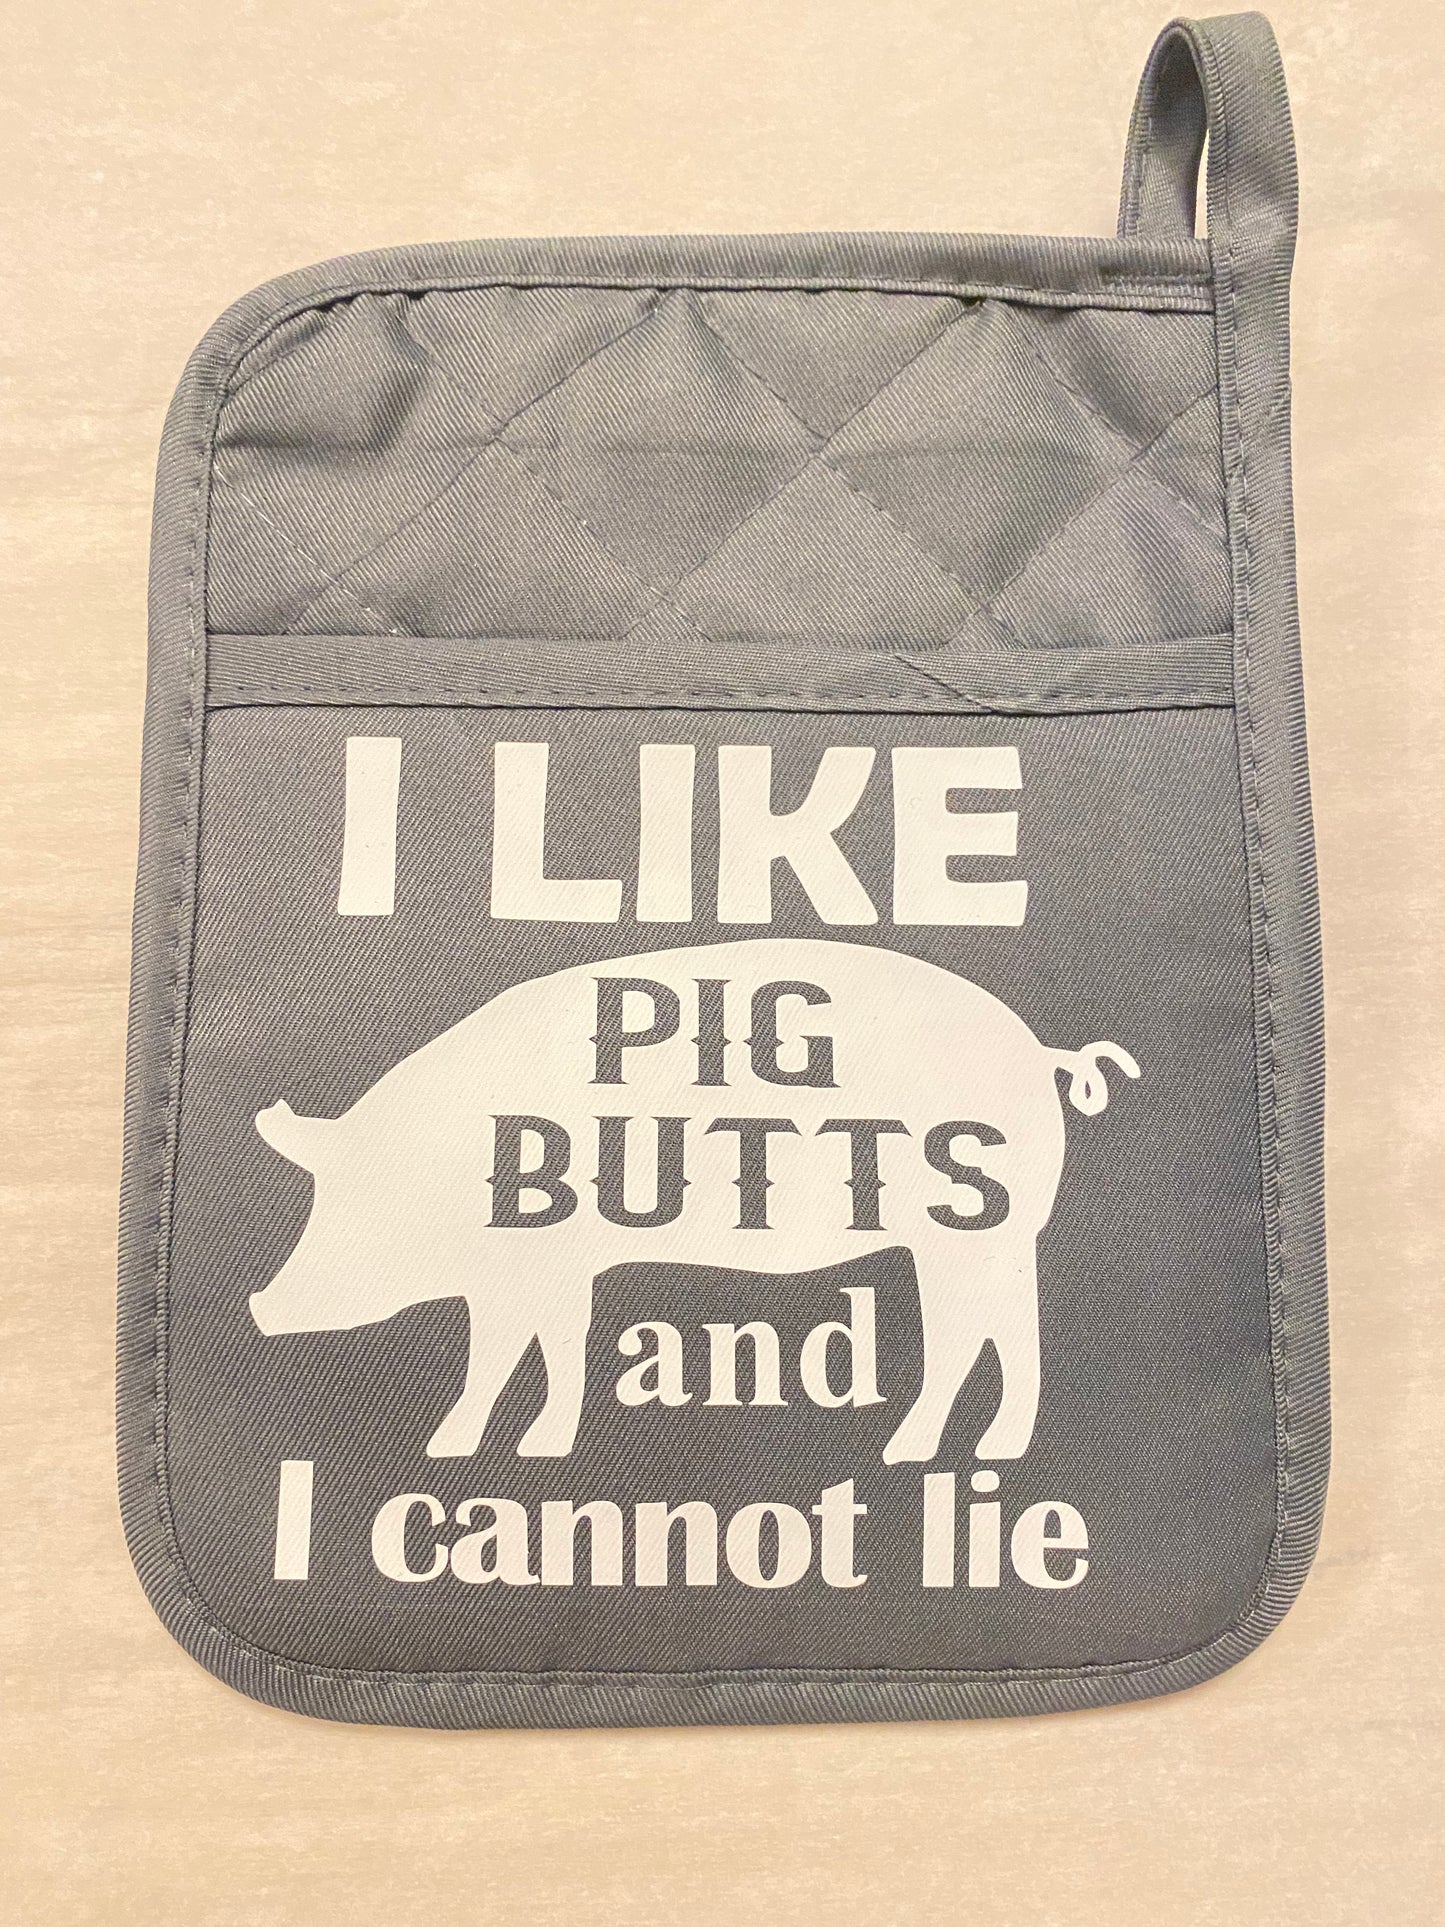 I like PIG butts and I cannot lie potholder